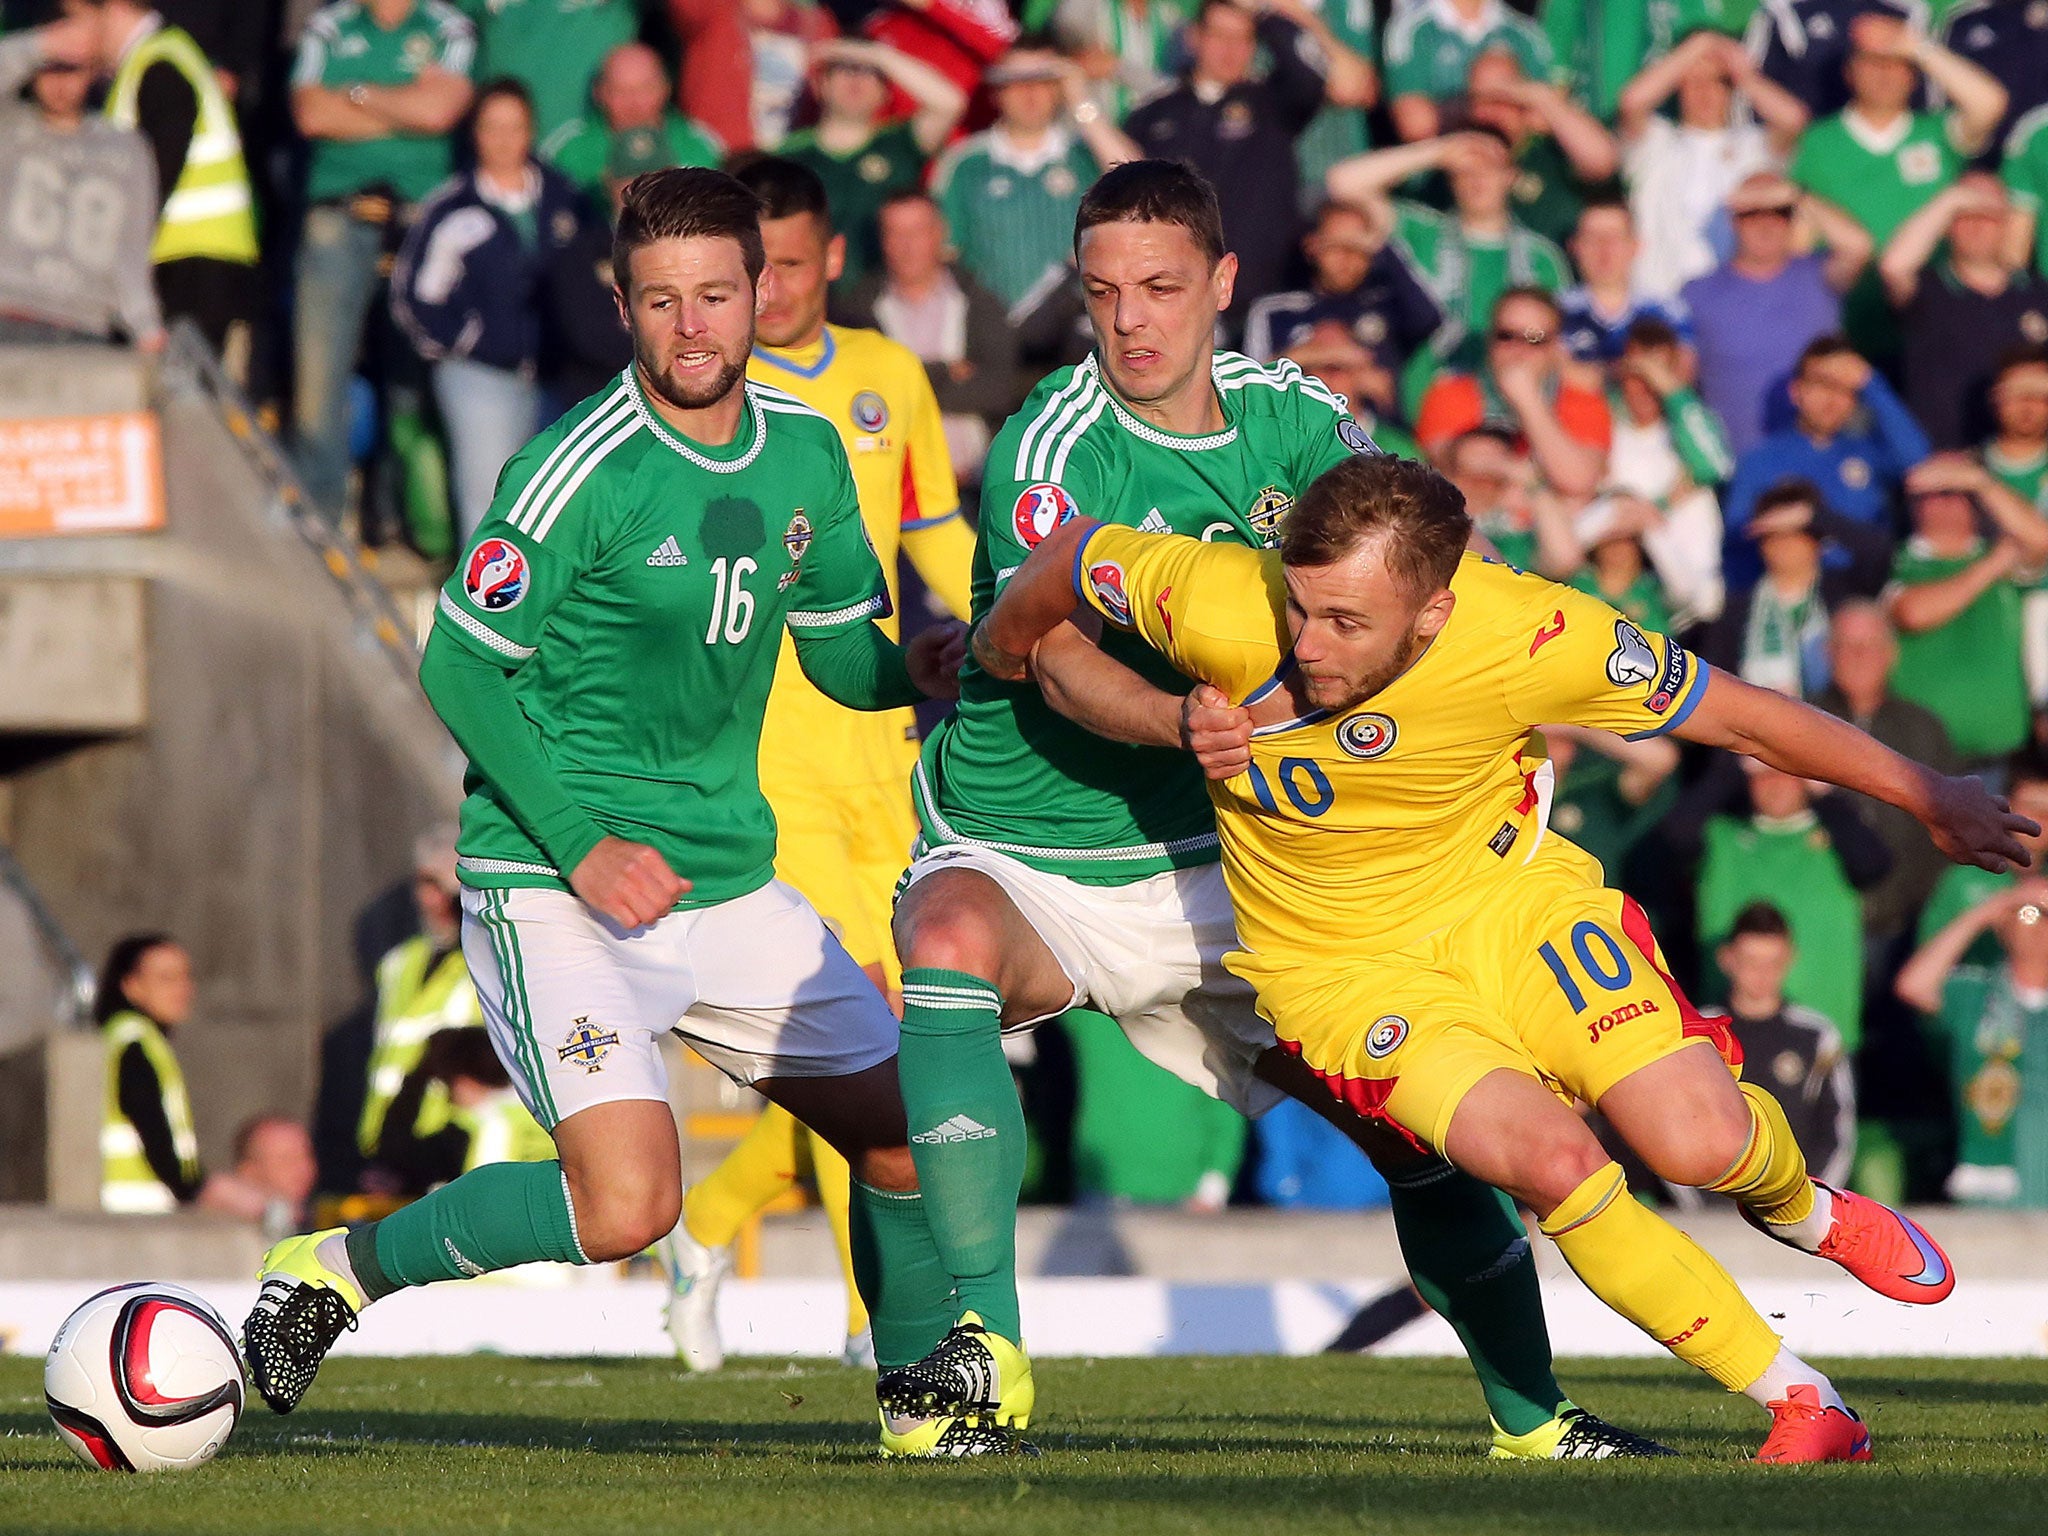 Northern Ireland's midfielder Oliver Norwood (L) and defender Chris Baird (2nd R) vie with Romania's midfielder Ivan Lorenzo